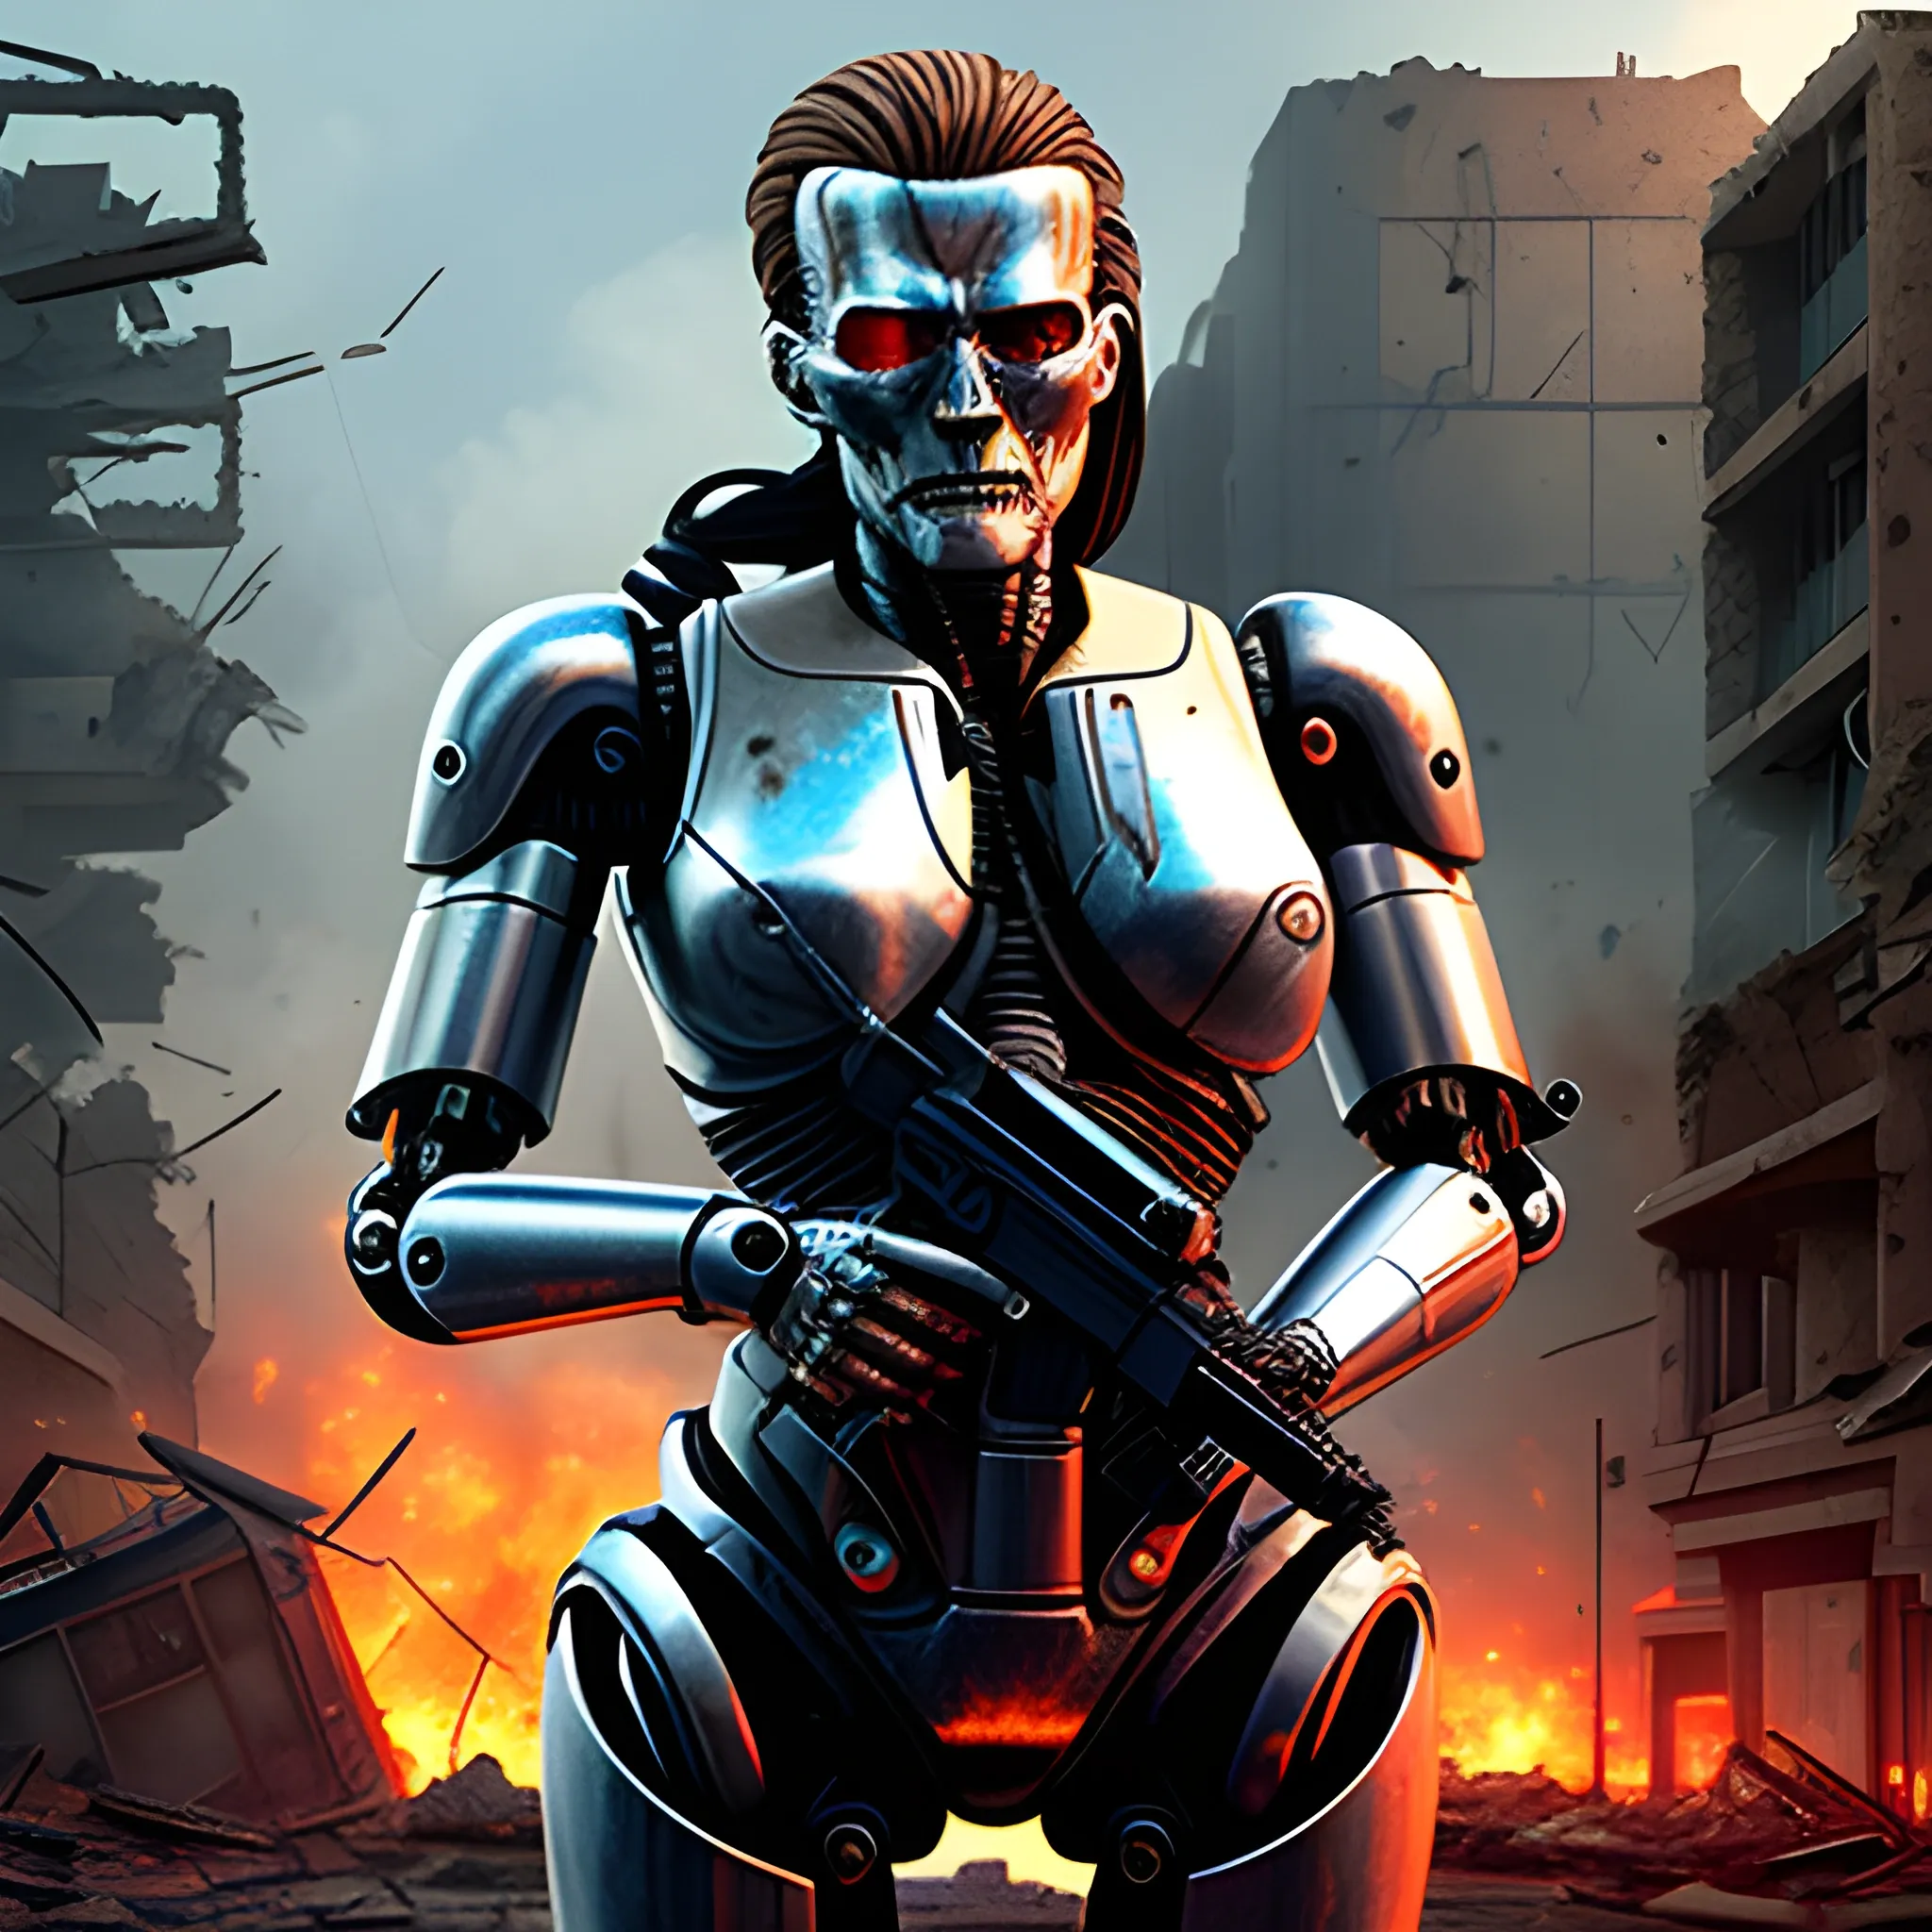 Terminator robot, sci-fi detail, holding gun, in ruins of city，women